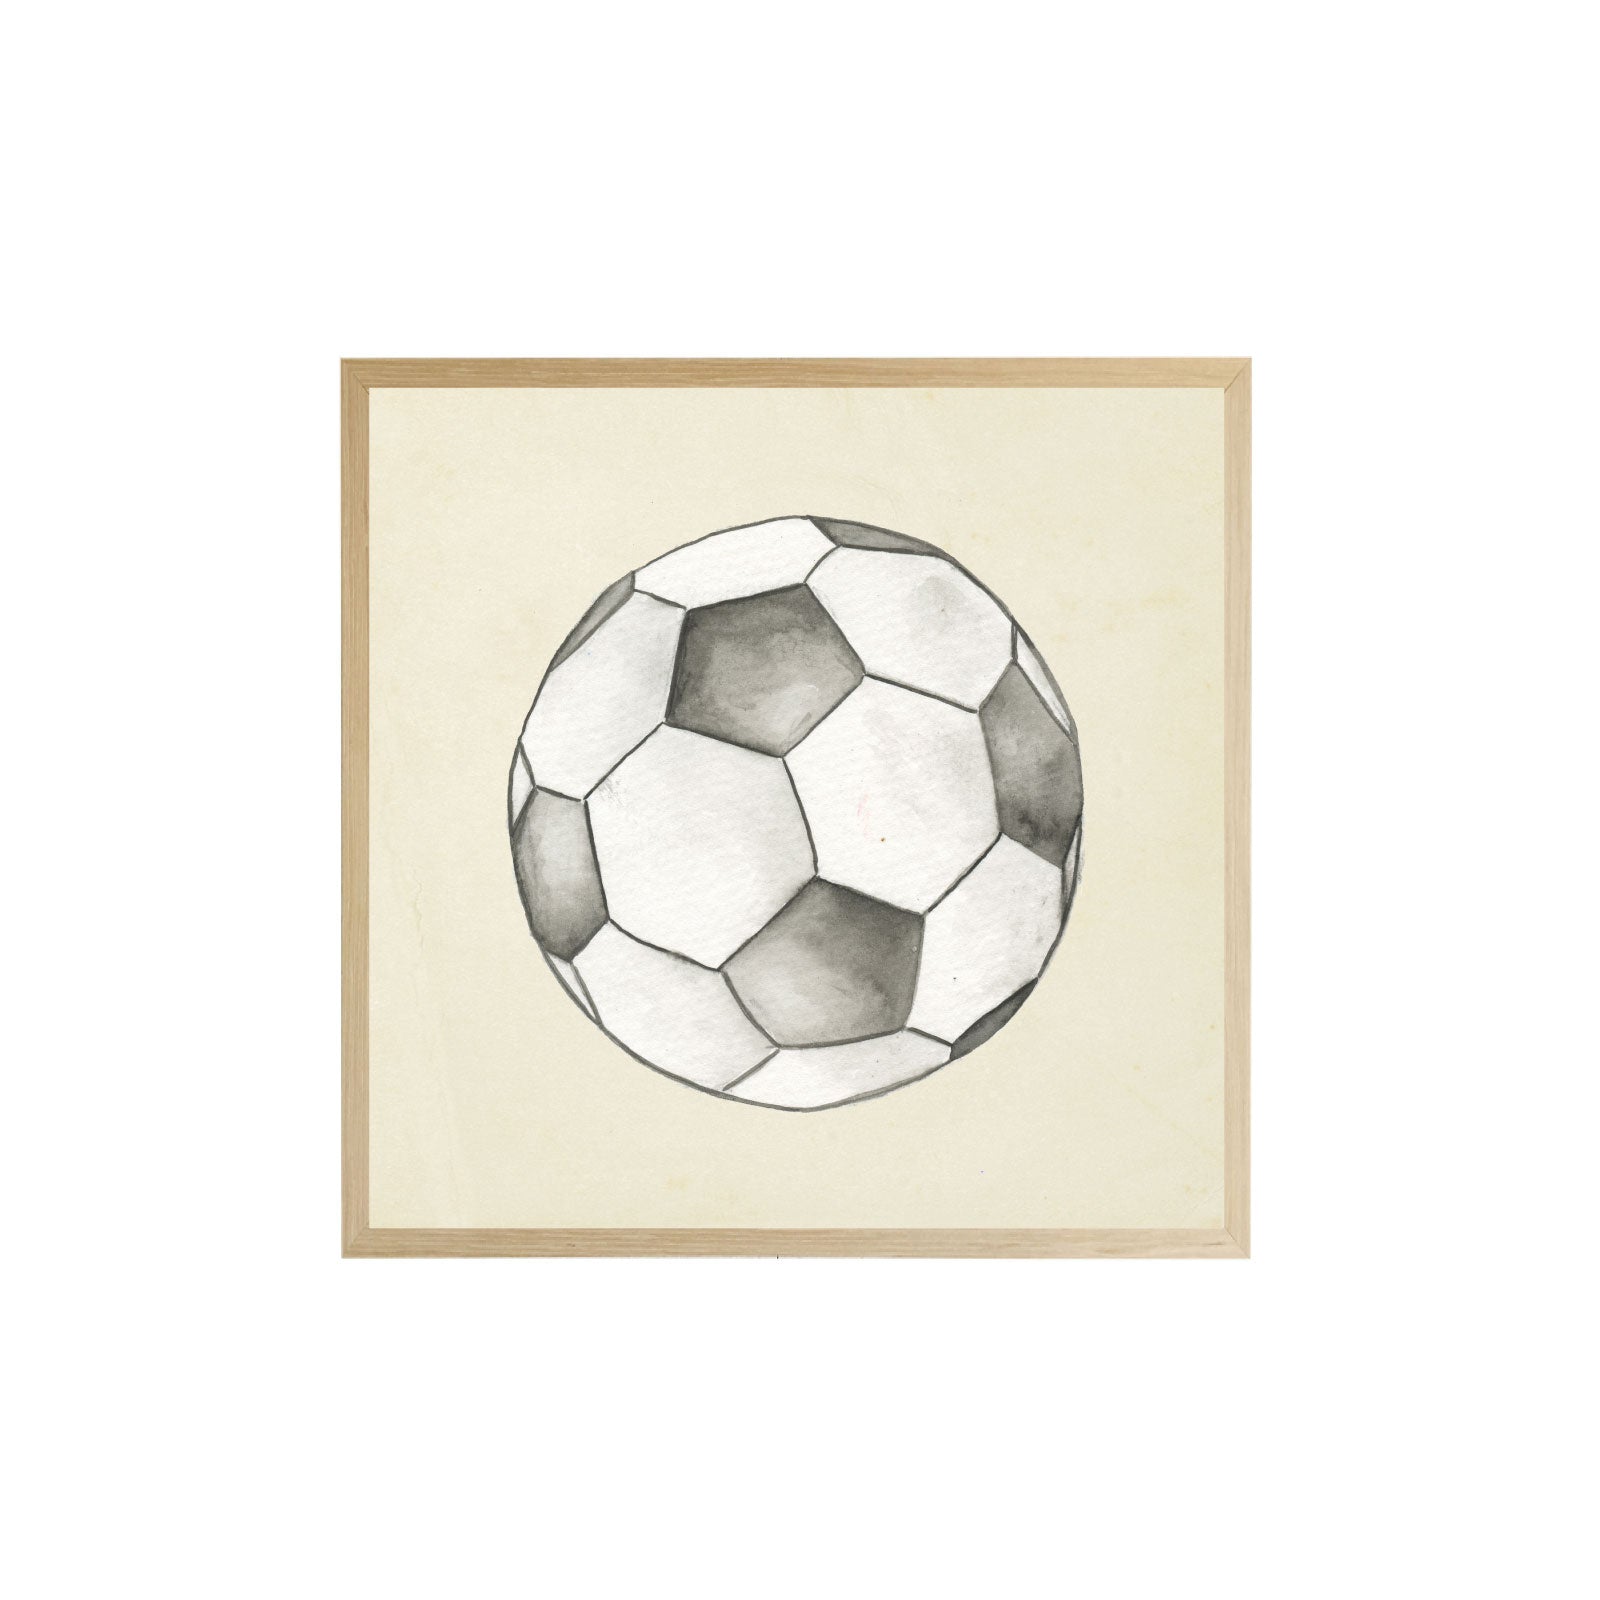 Amazon.com: 3dRose db_6254_1 Soccer Ball Drawing Book, 8 by 8